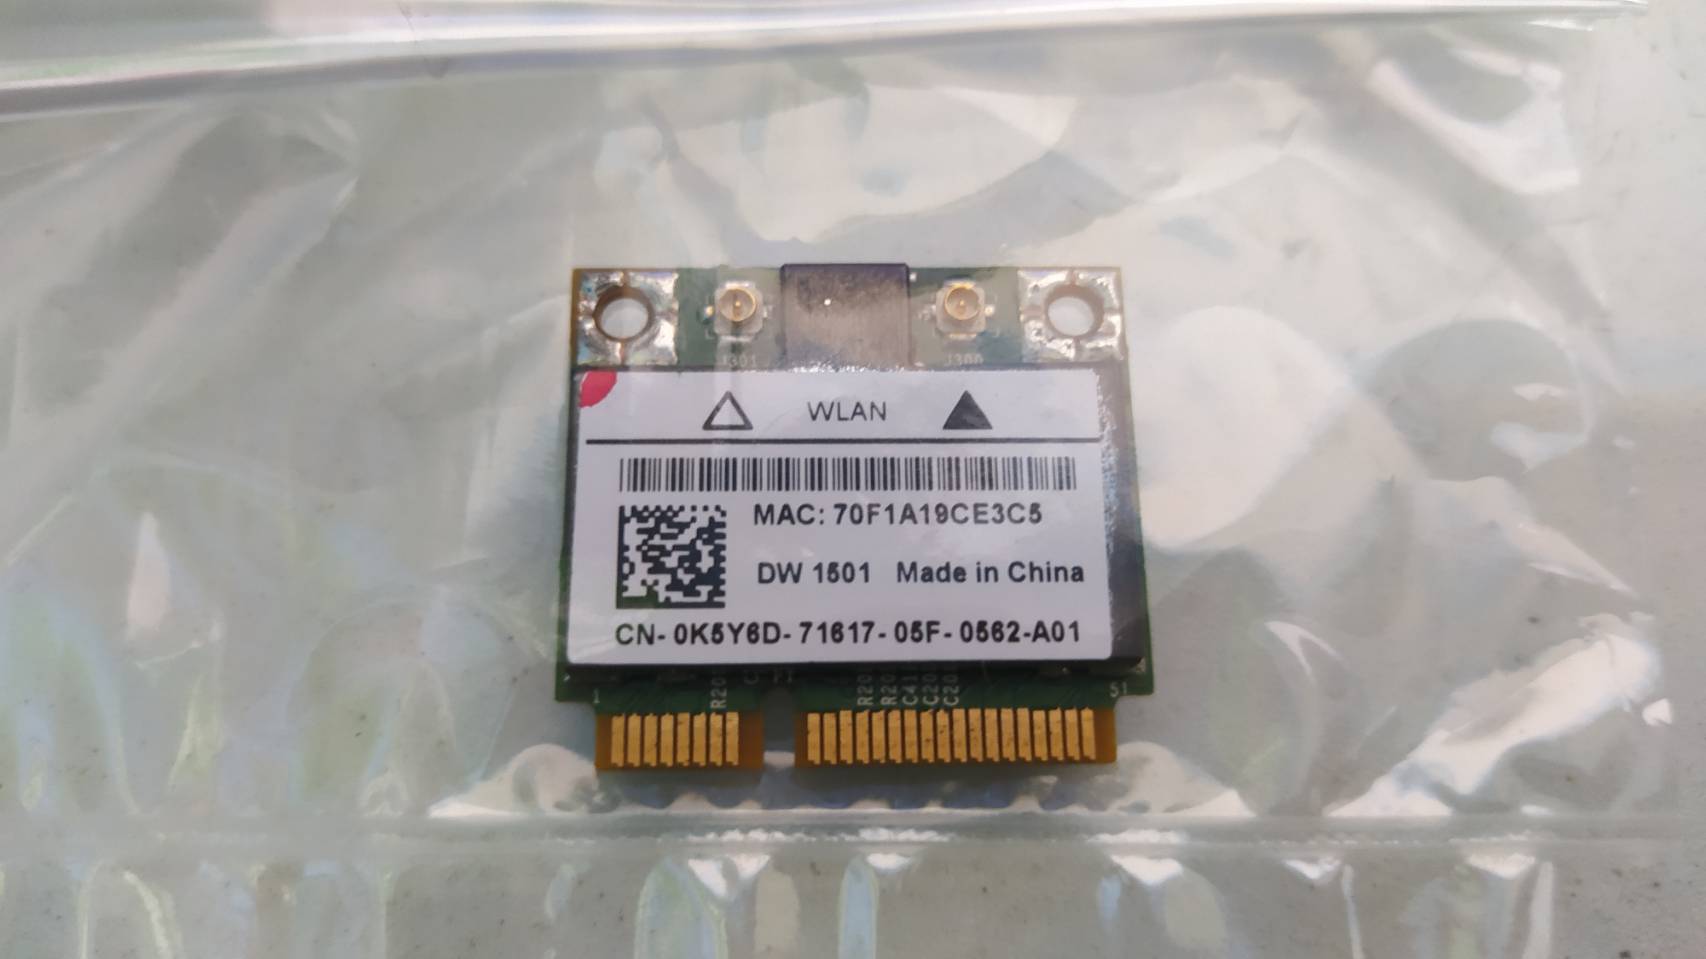 Broadcom 4313 DW1501 BCM94313HMG2L WLAN 802.11n WiFi Mini PCI-E Card